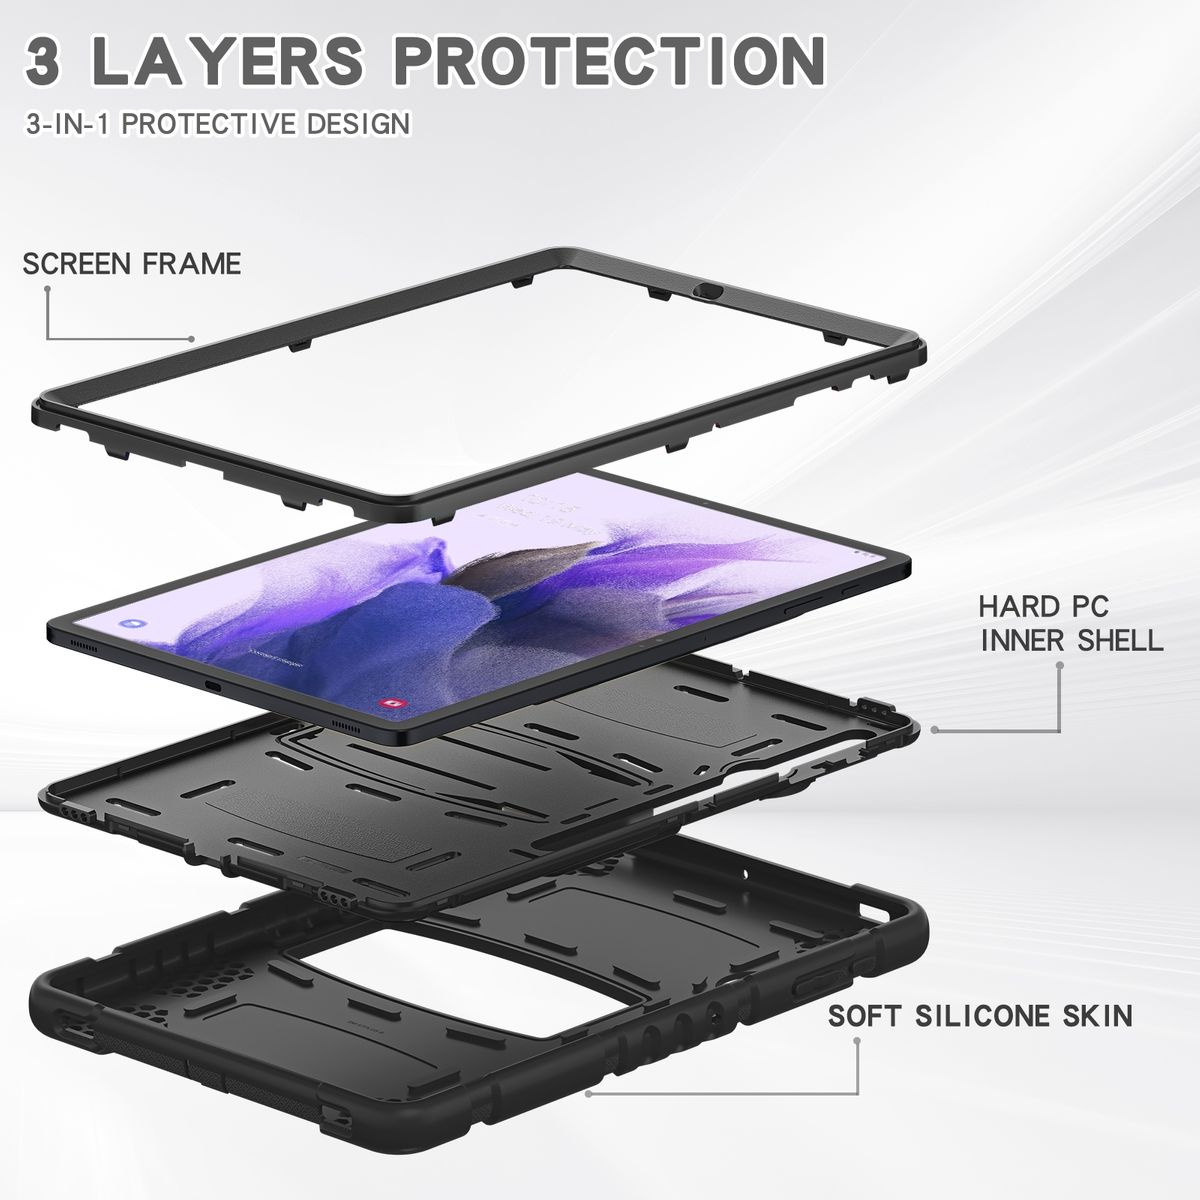 WIGENTO 360 Grad aufstellbare Voll Schutz Plus, Schwarz FE | / Tasche, Tab Backcover, S7 Plus Tab Samsung, S7 Galaxy Tab S8